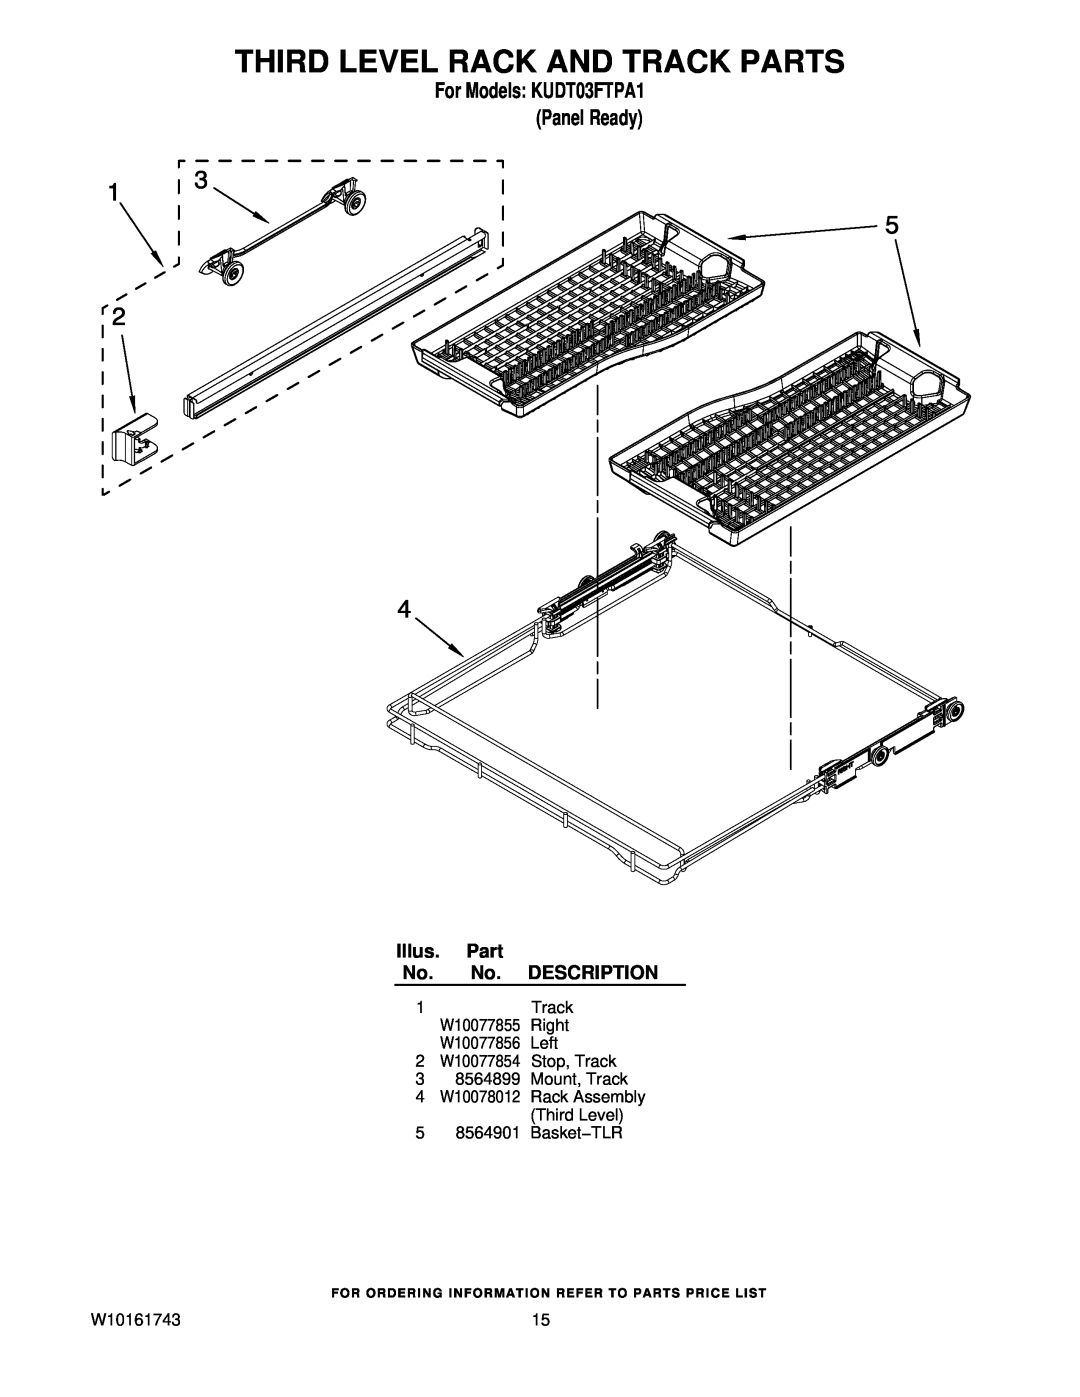 KitchenAid manual Third Level Rack And Track Parts, For Models KUDT03FTPA1 Panel Ready, Illus. Part No. No. DESCRIPTION 